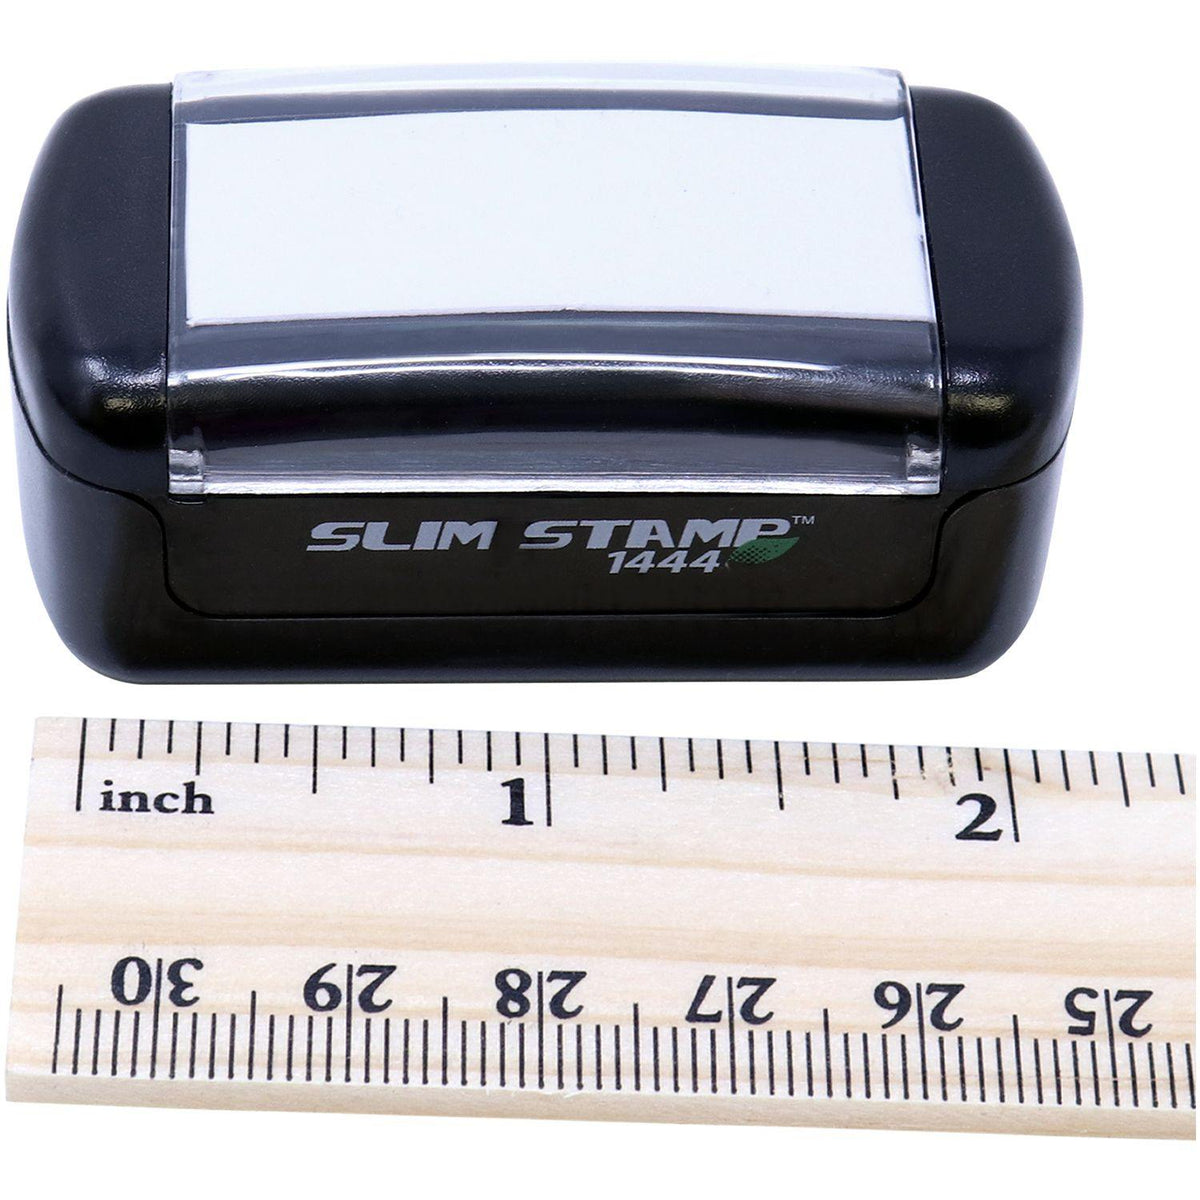 Measurement Slim Pre-Inked Pagado Stamp with Ruler